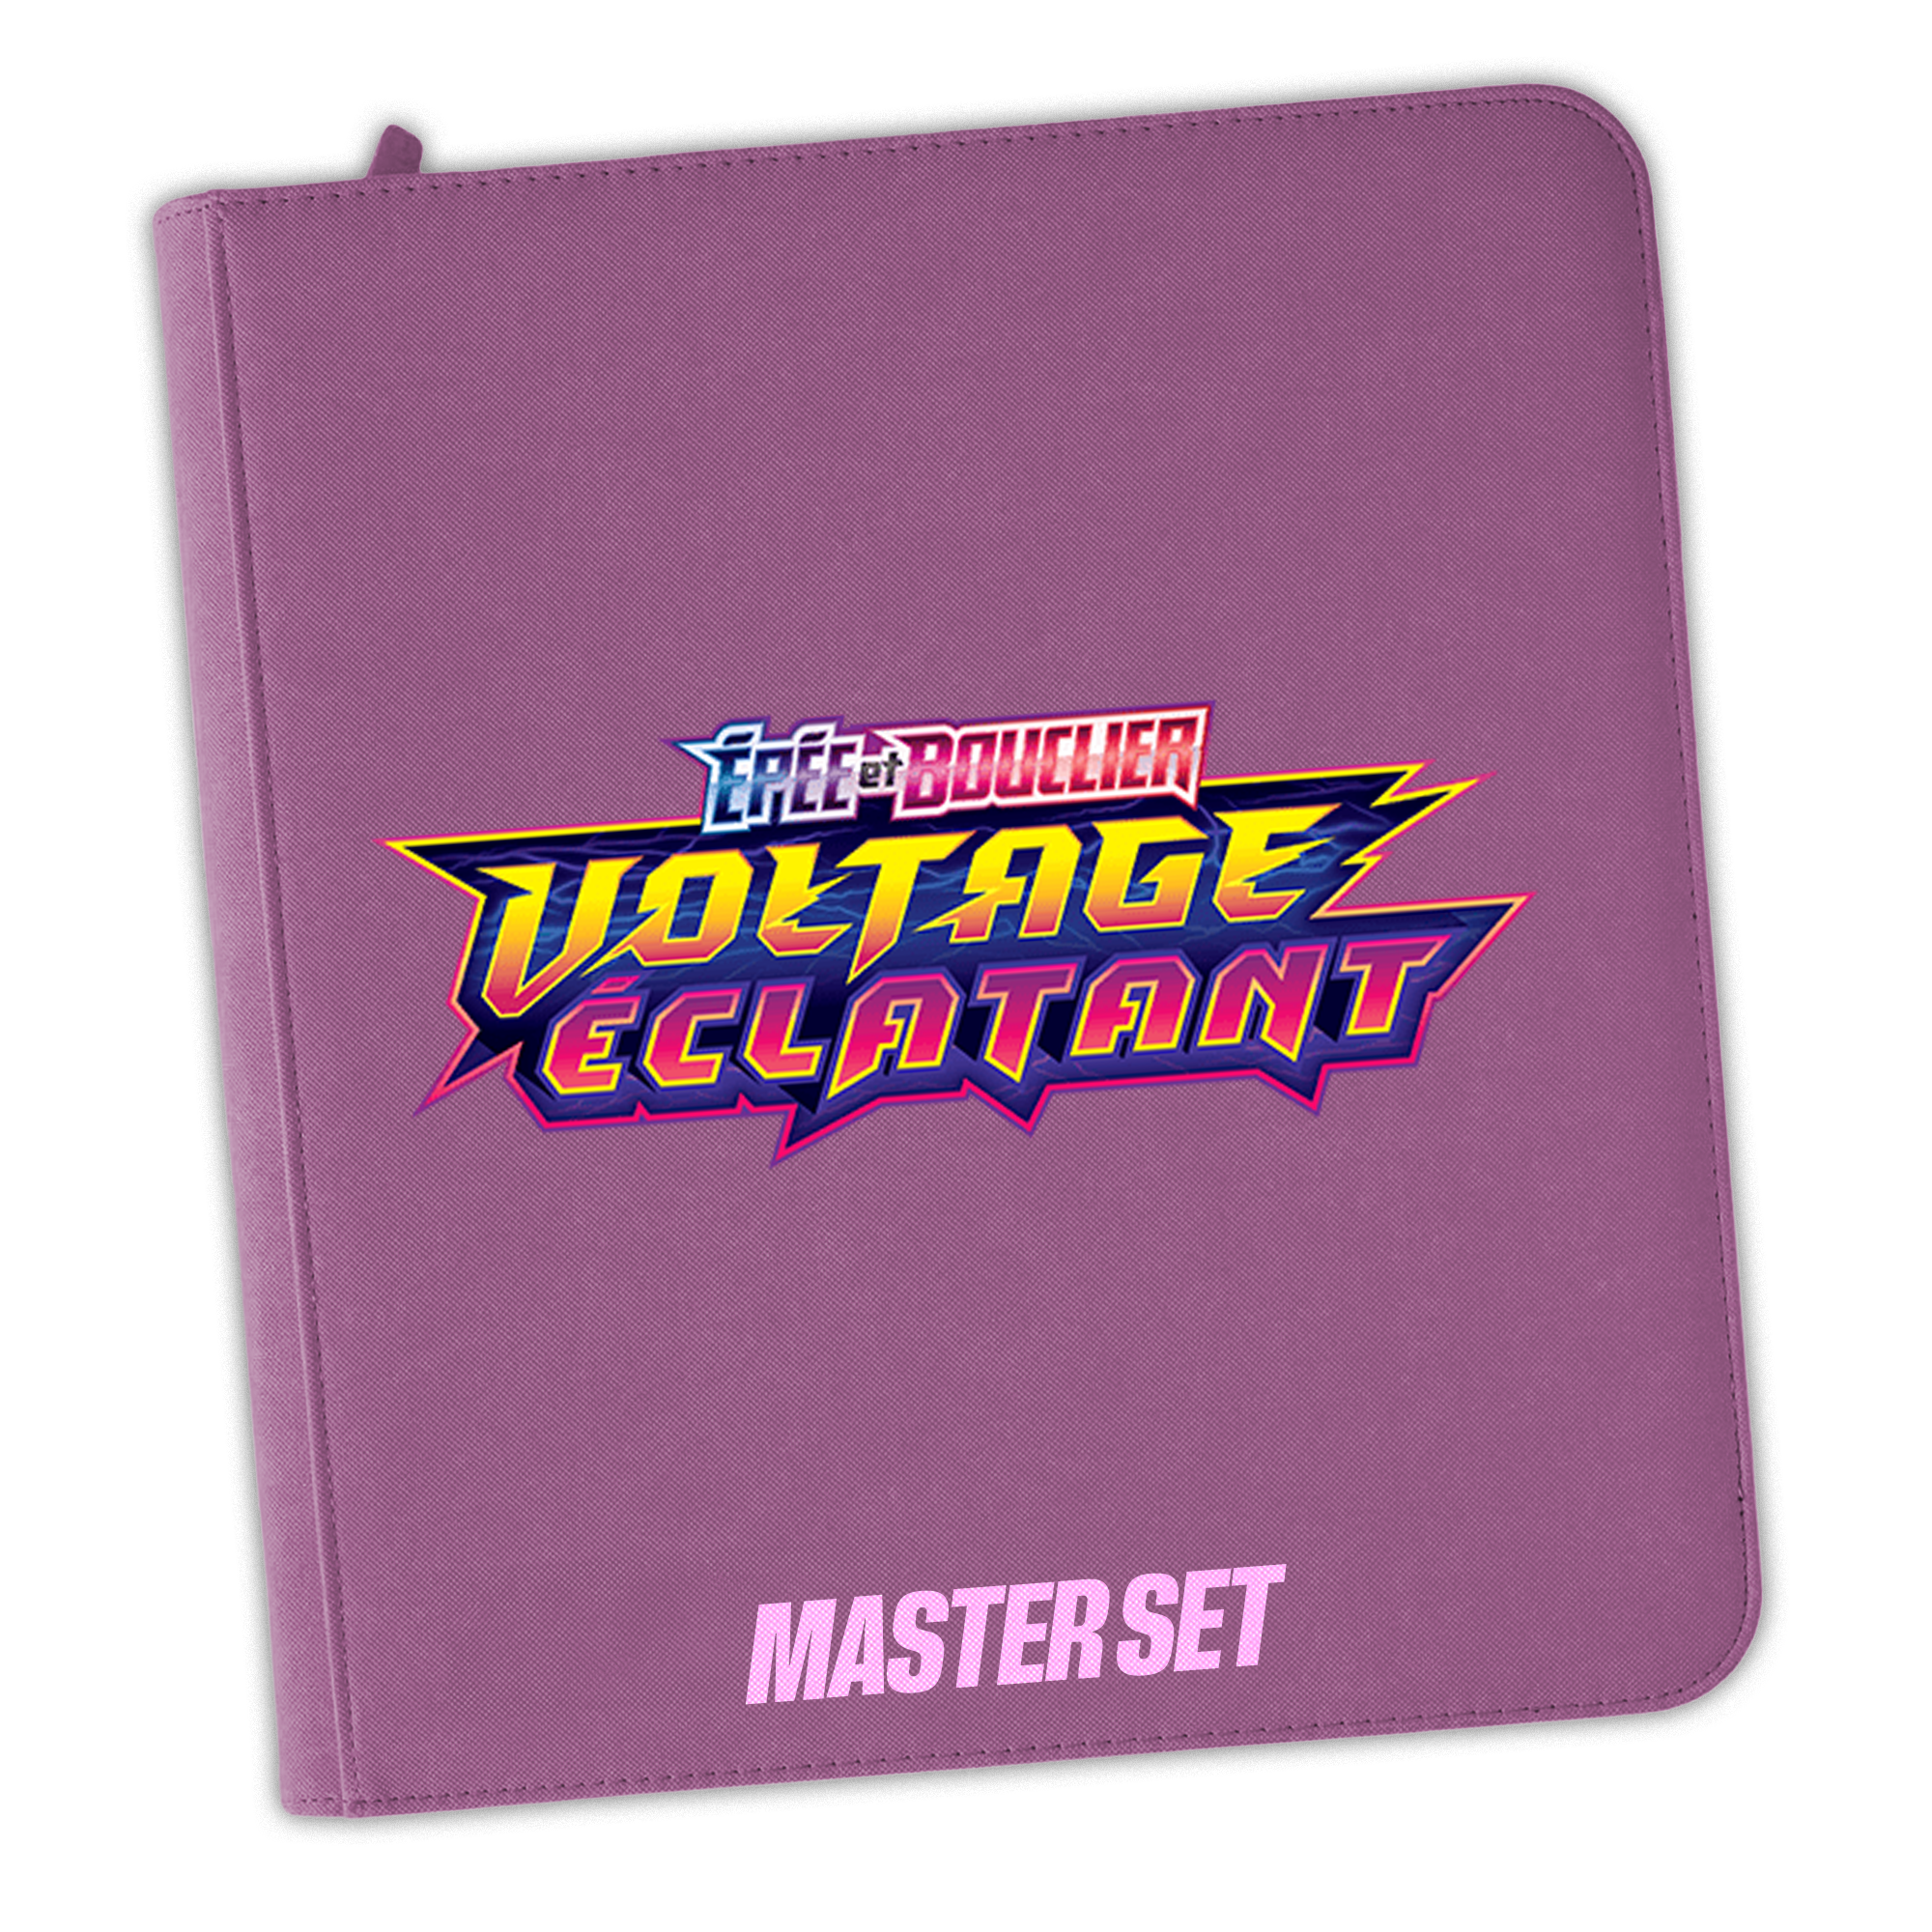 [MASTER SET] Master Set - EB04 - Voltage Eclatant [FR]